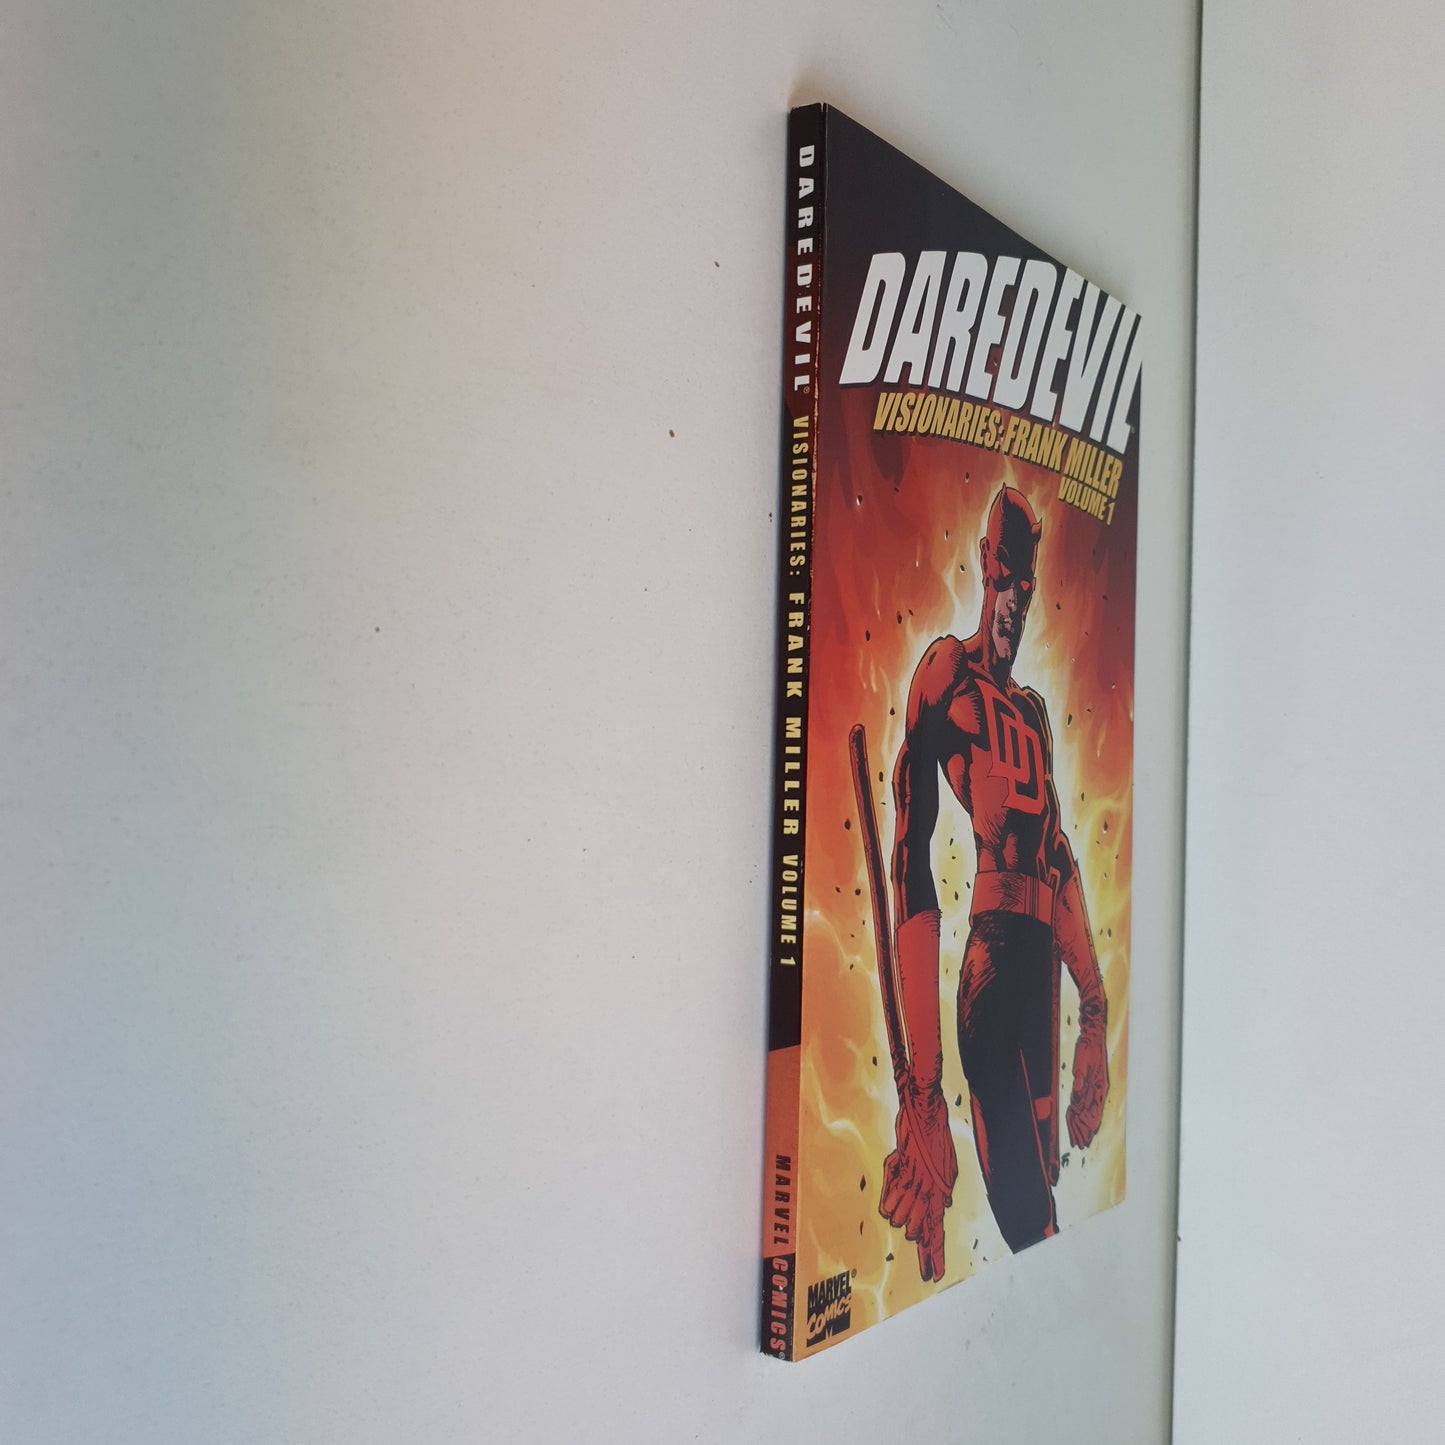 Daredevil Visionaries: Frank Miller Vol 1 (2000)